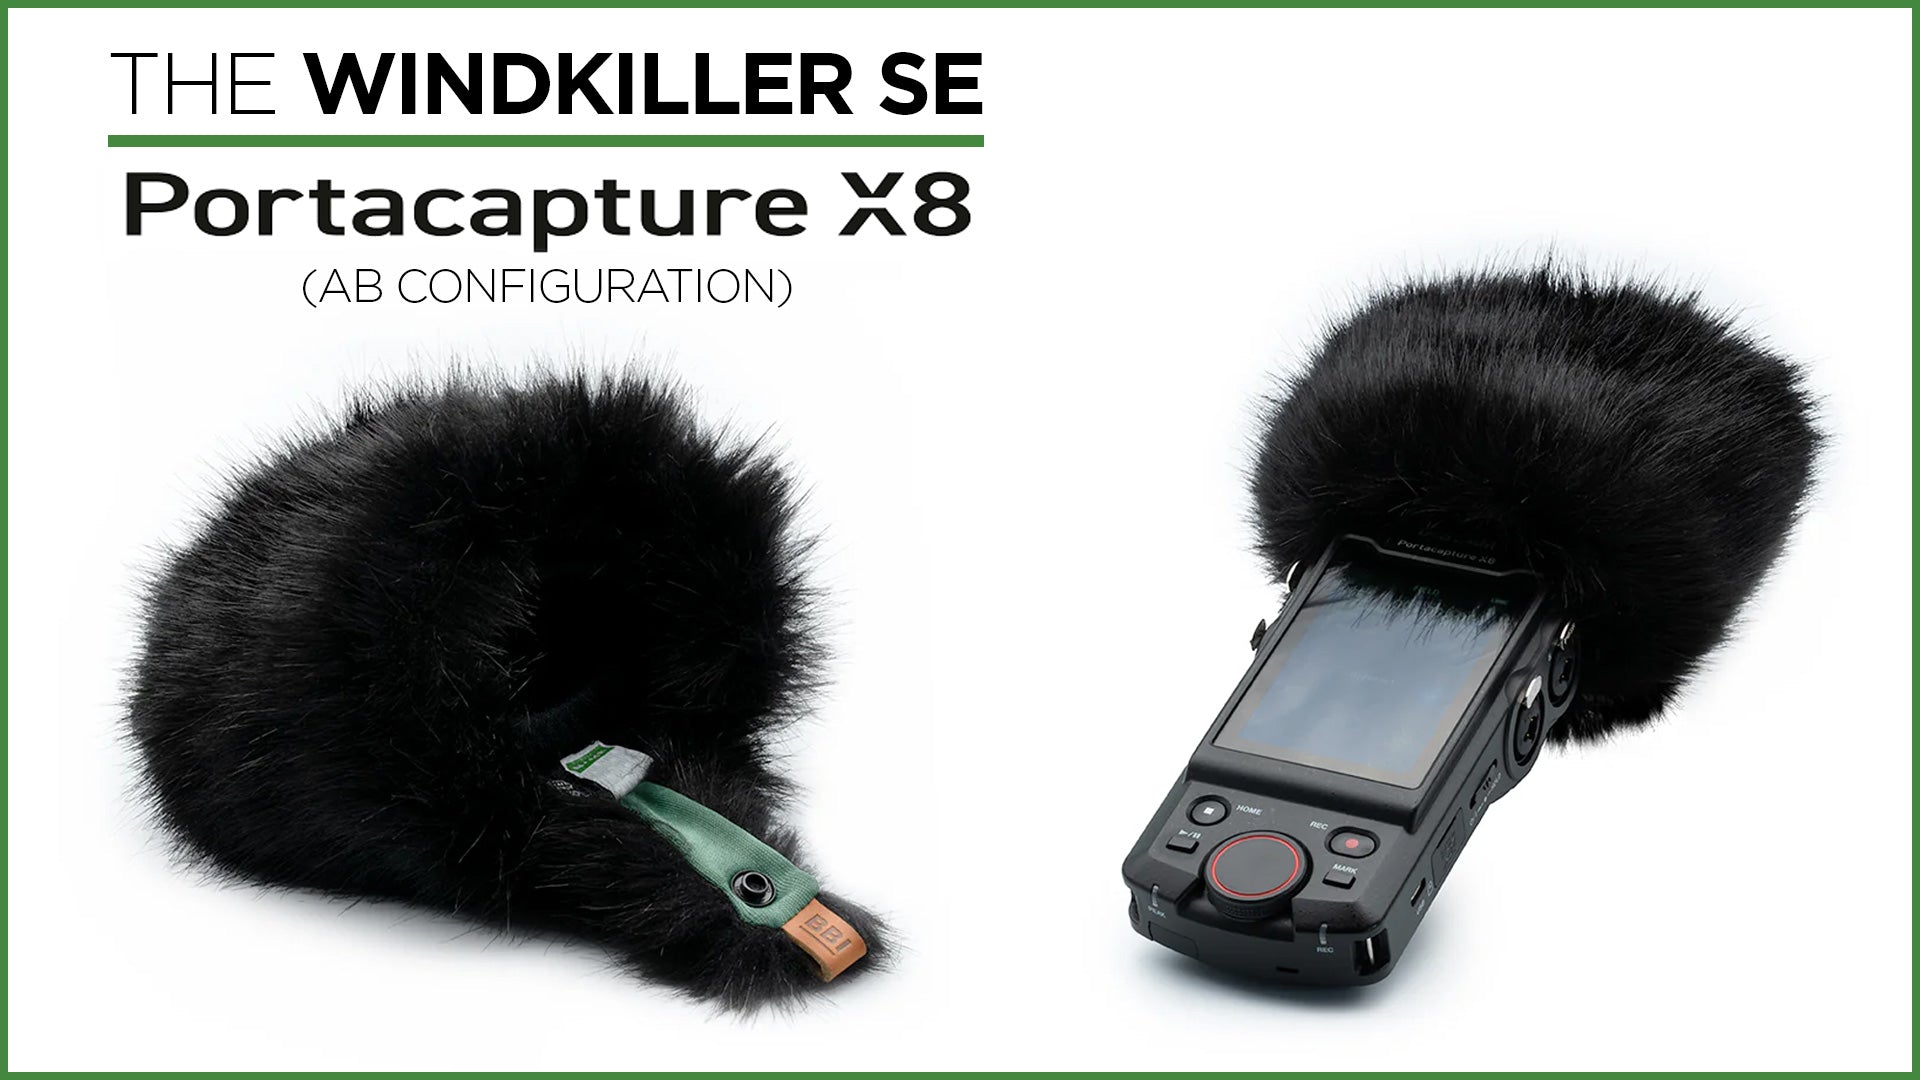 Introducing The Windkiller SE for Tascam Portacapture X8